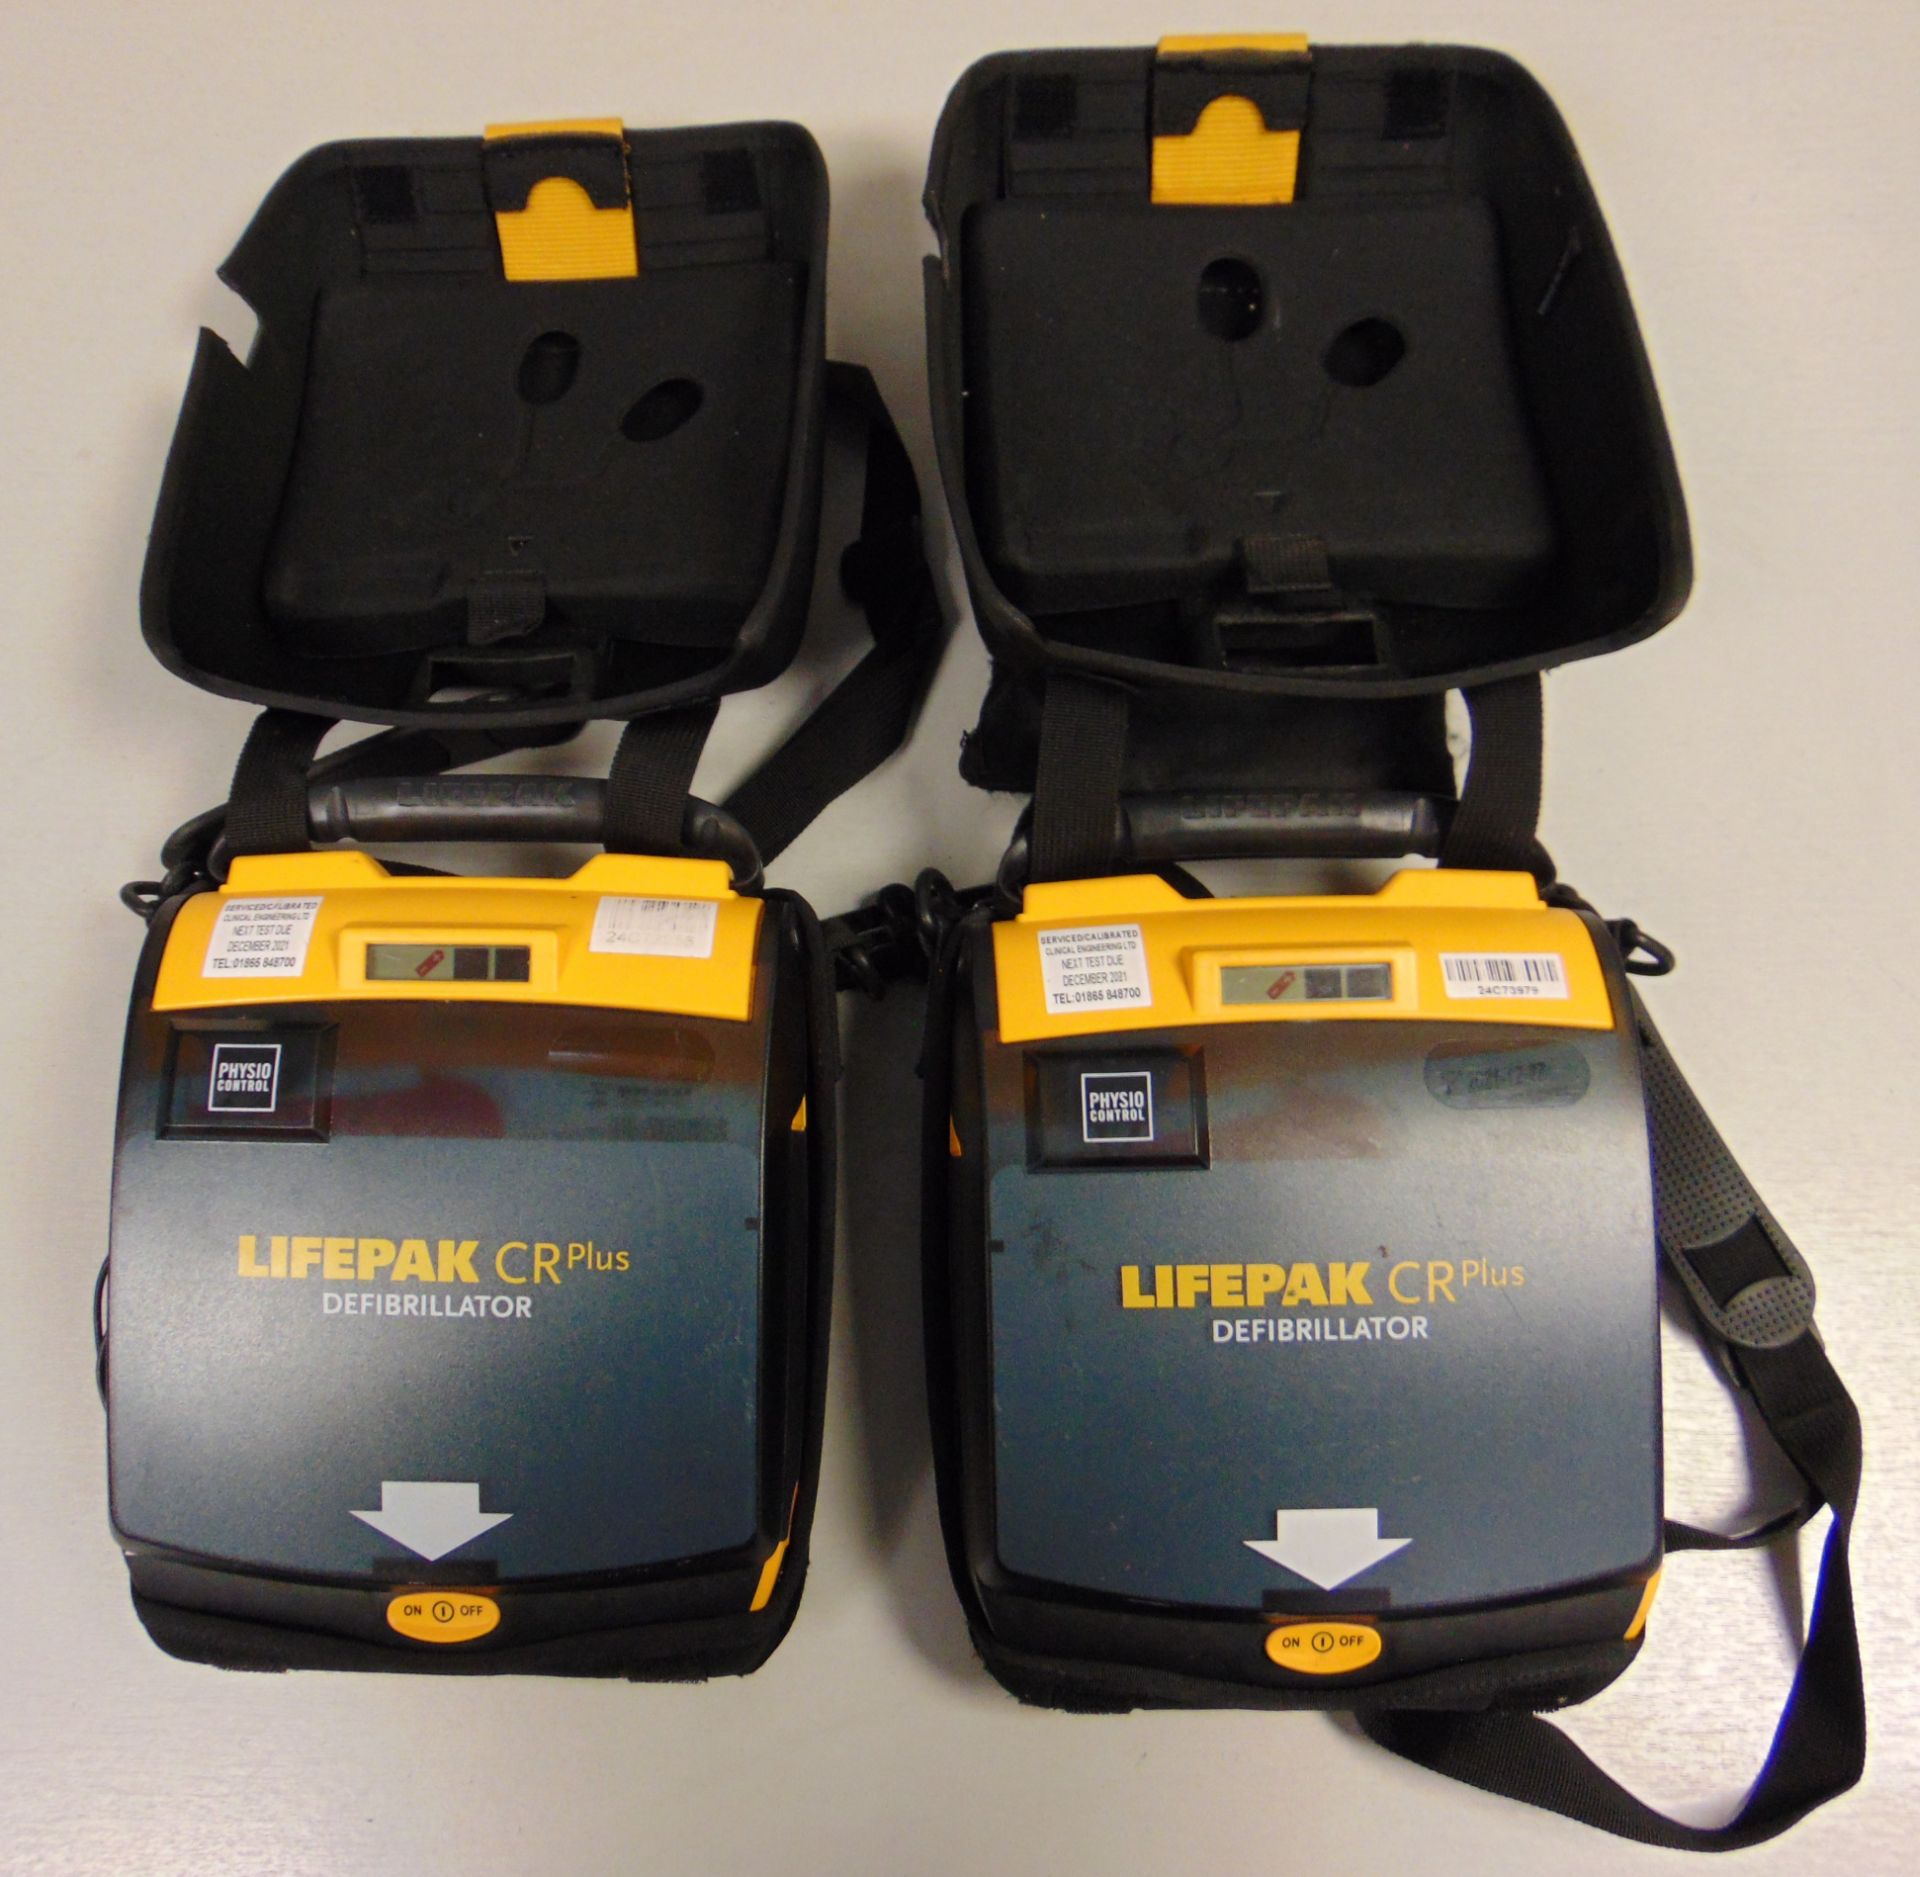 2 x Physio-Control Lifepak CR Plus Defibrillator Units - Fully Automatic - Image 3 of 4